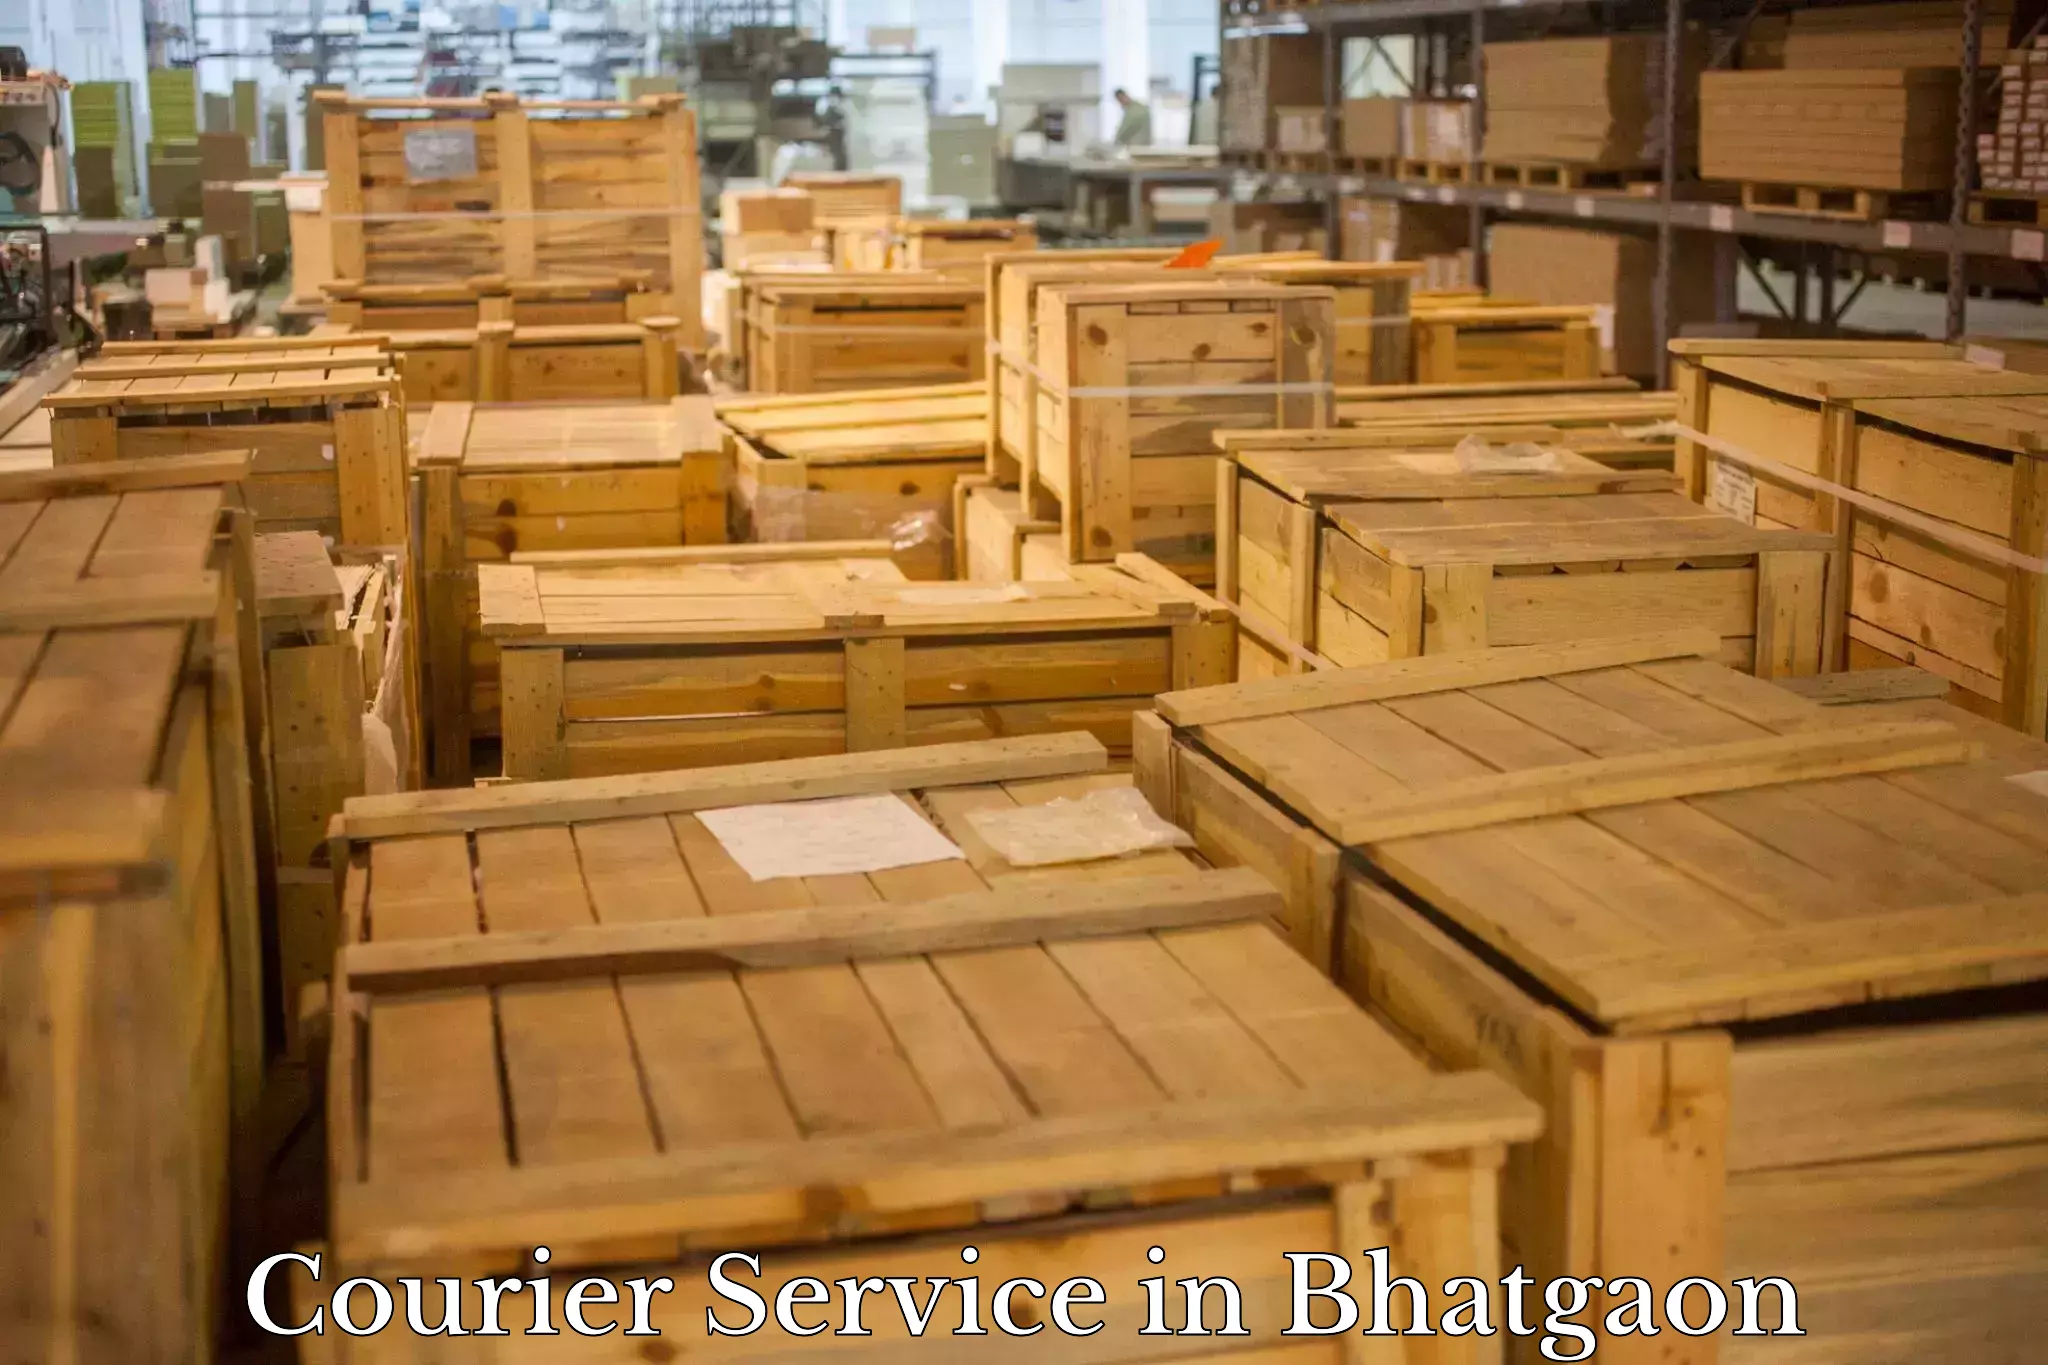 Logistics management in Bhatgaon